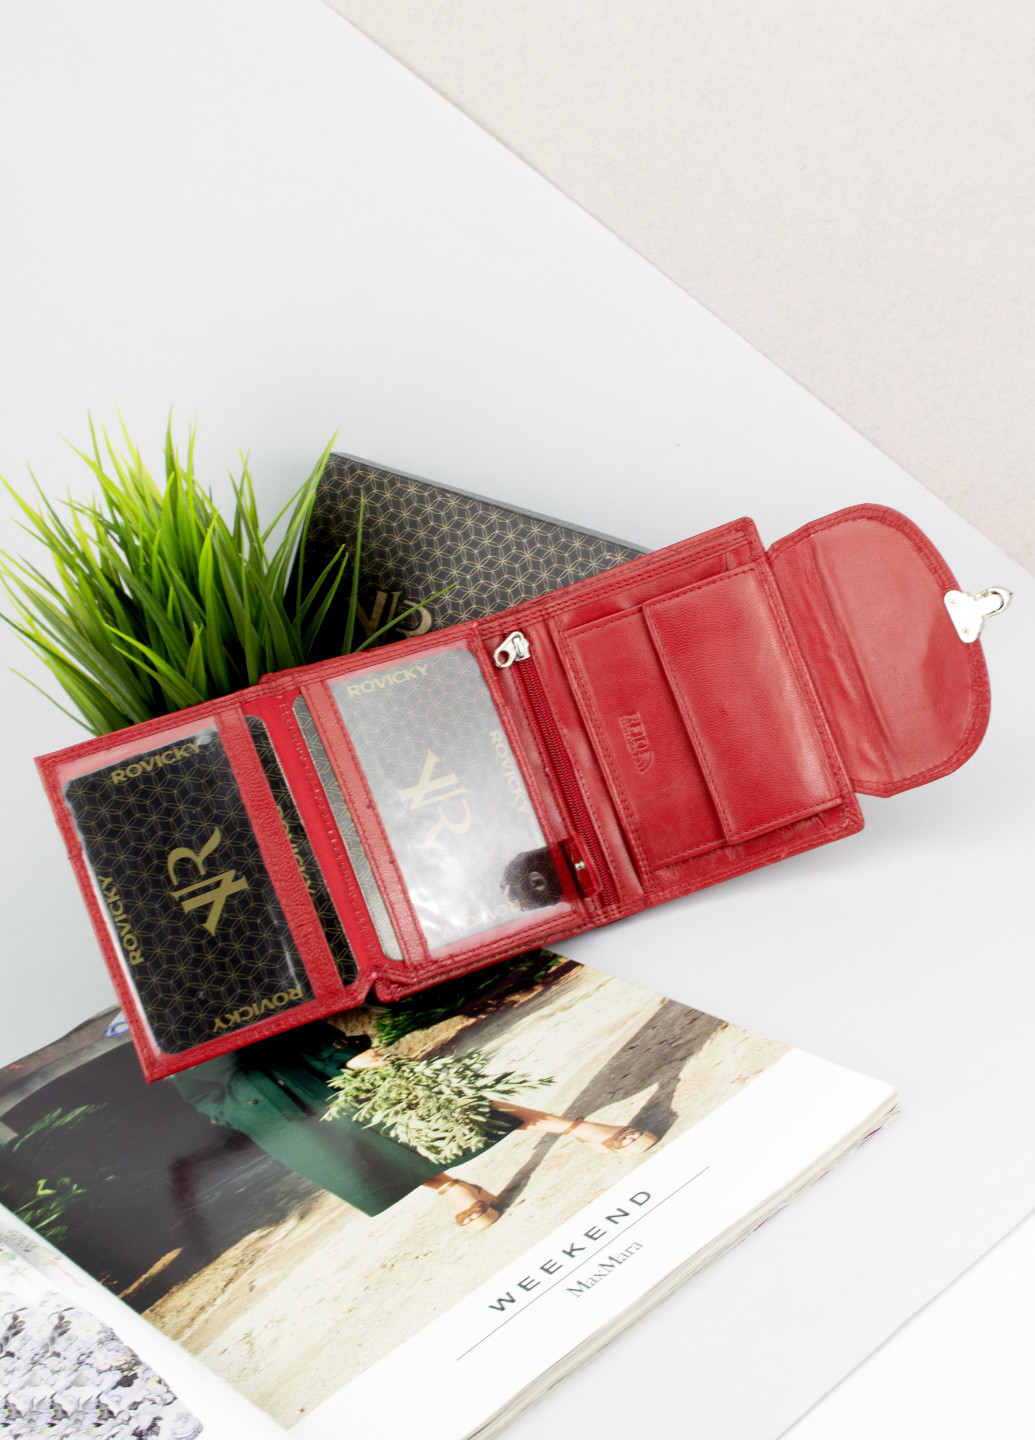 Женский кожаный кошелек R-RD-19 GCL-Q red маленький красный Rovicky (256549993)